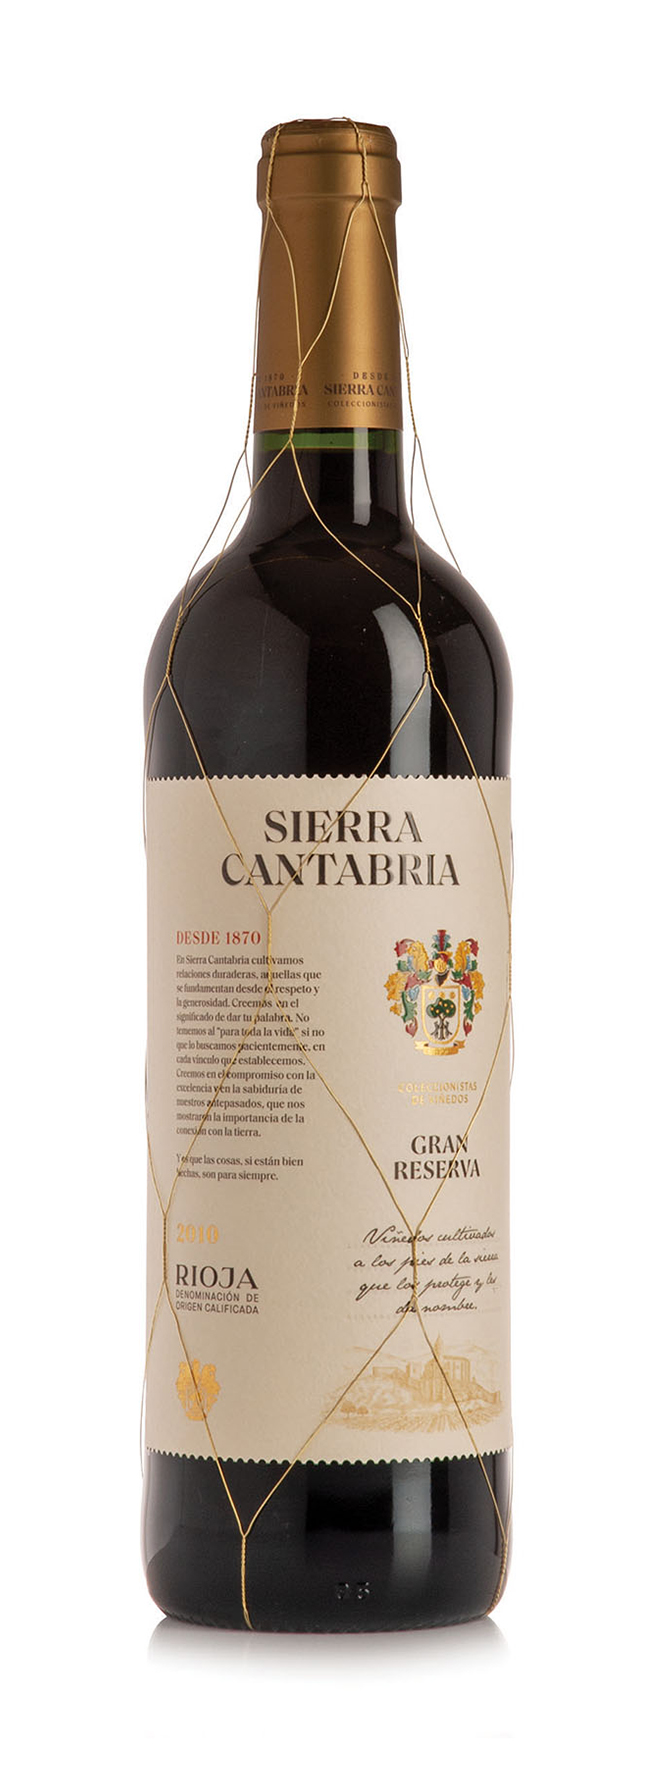 Sierra Cantabria Gran Reserva Bottle Photo